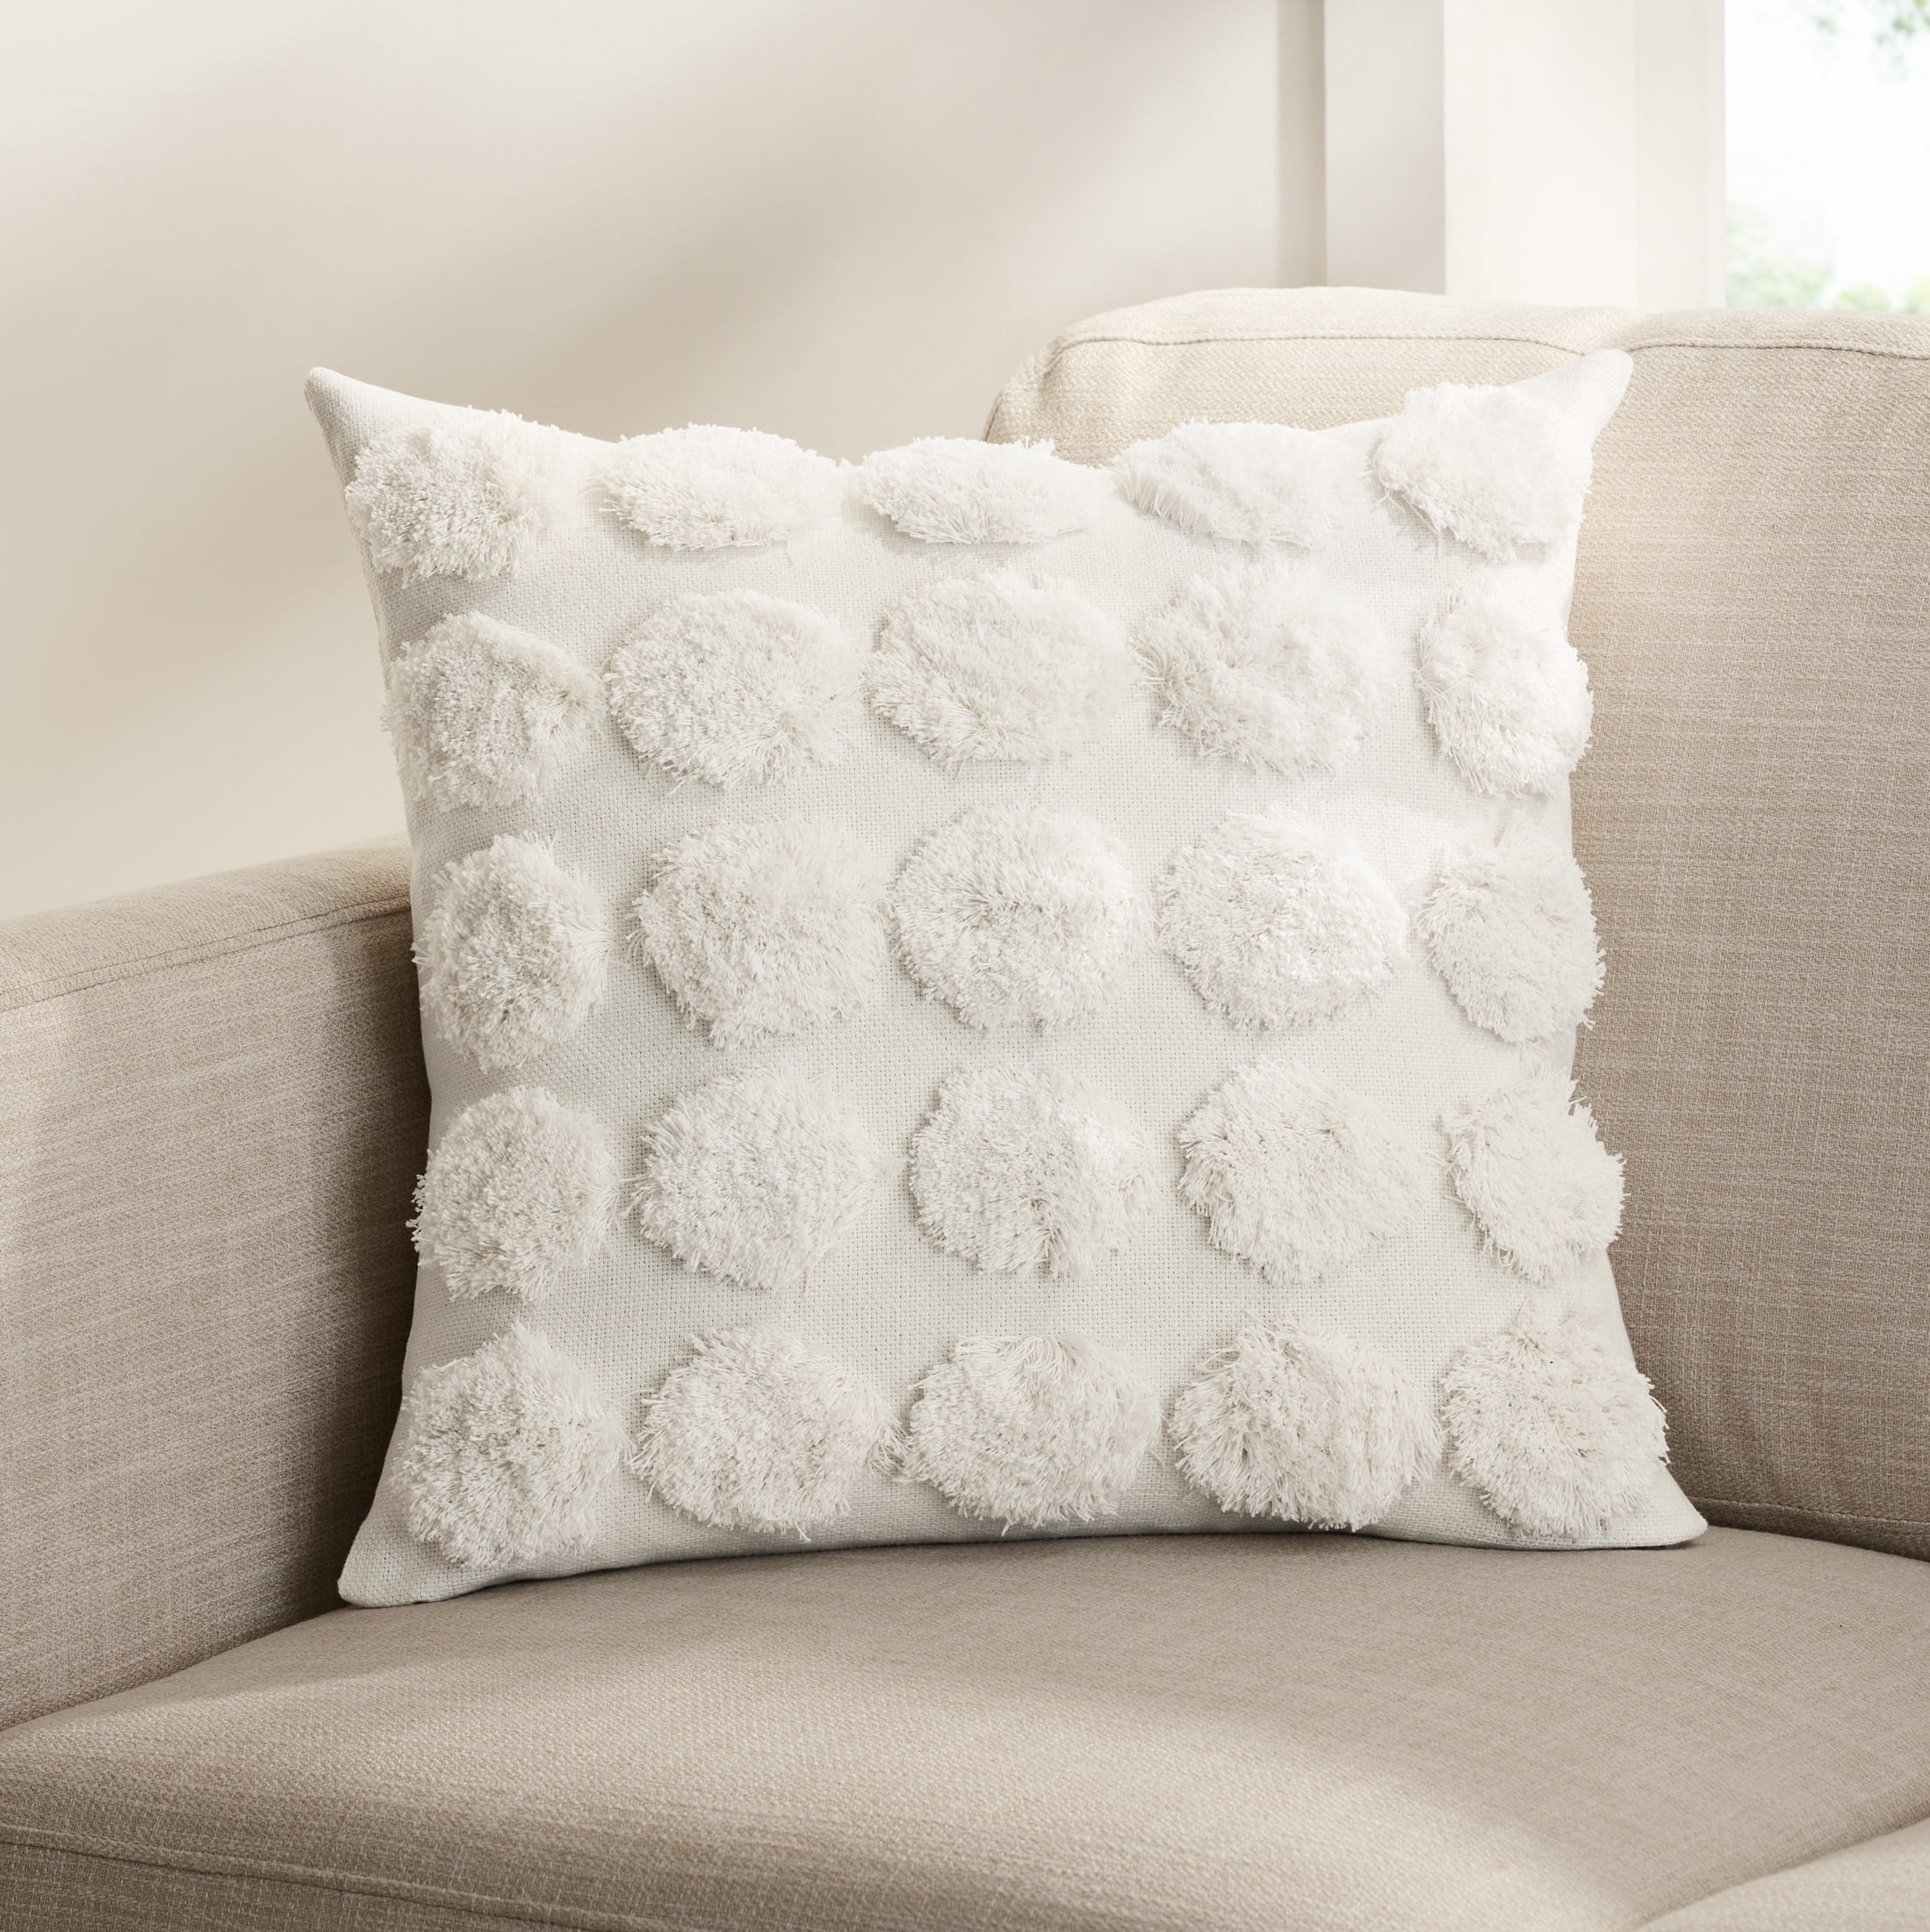 Modern Tufted Square Throw Pillow White - Threshold™